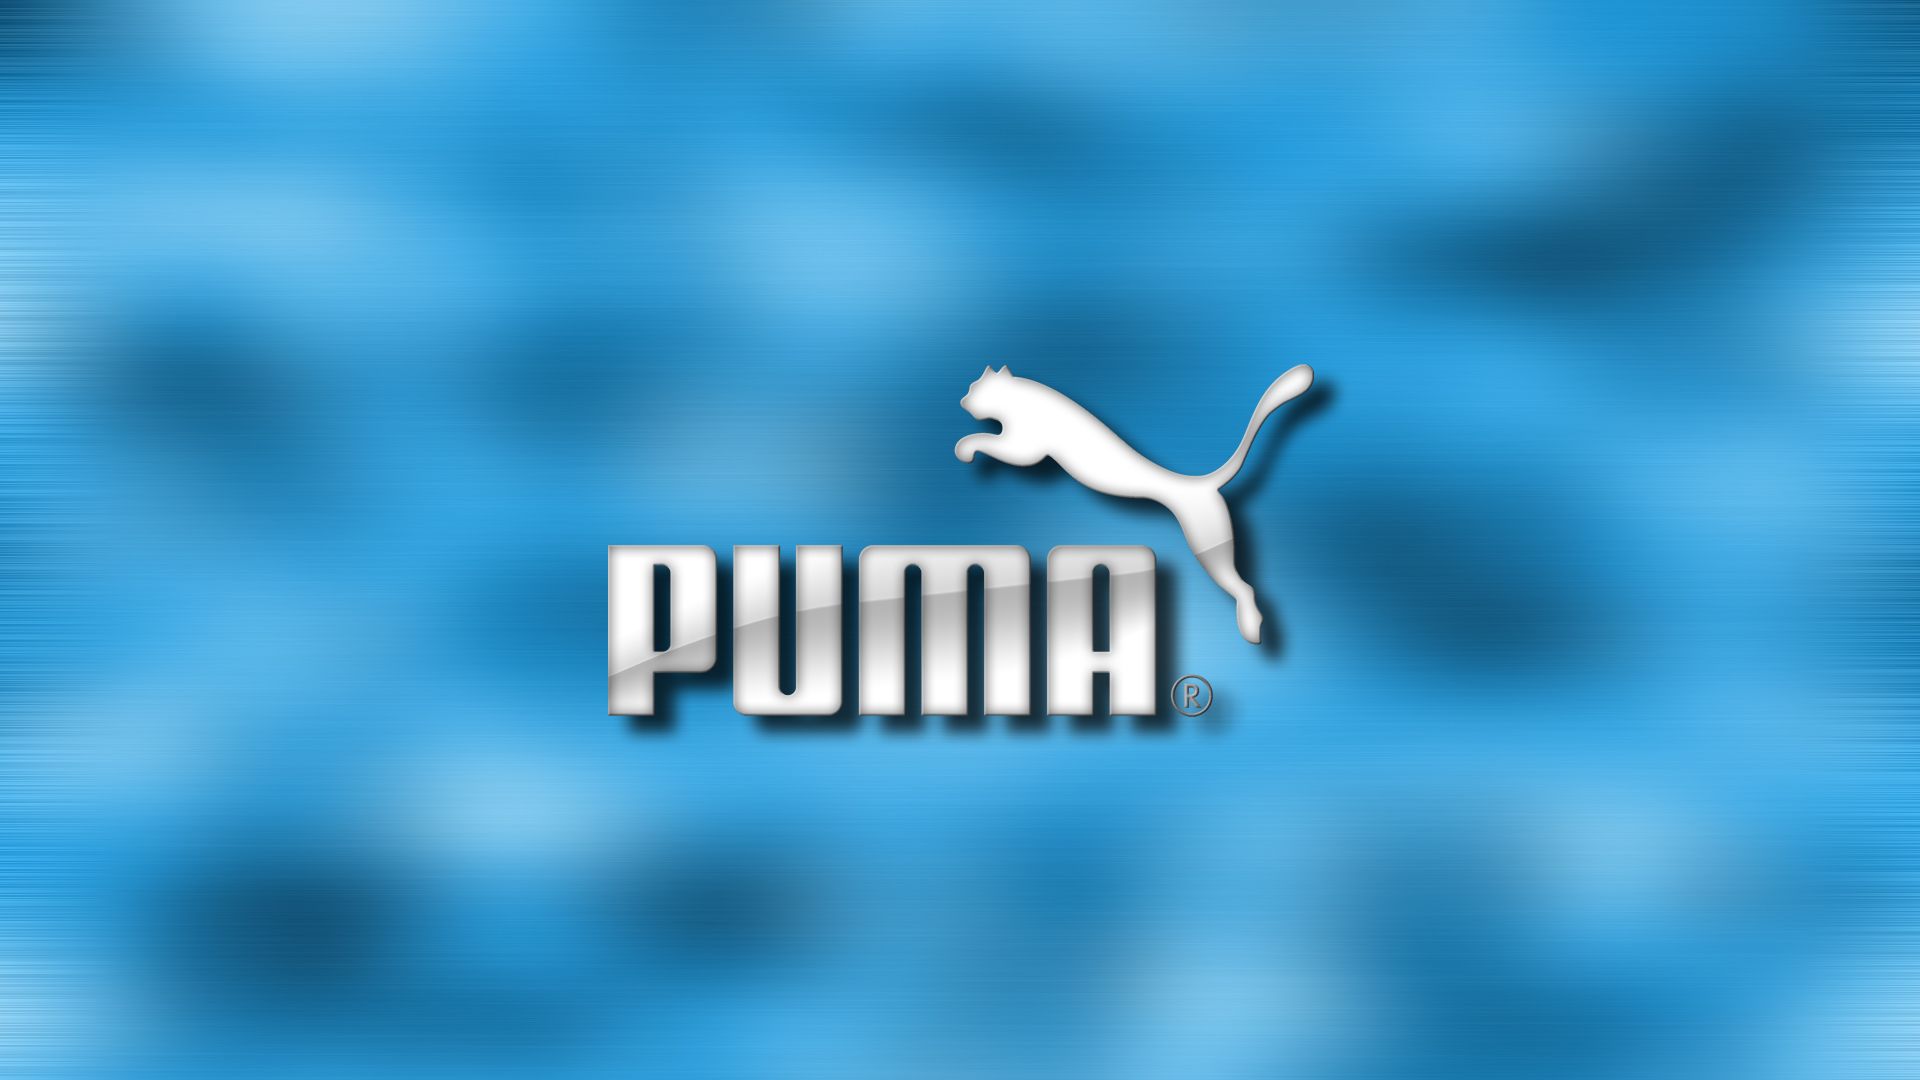 Puma Wallpaper. Puma Wallpaper, Wallpaper Puma Shoes and Prince Puma Wallpaper